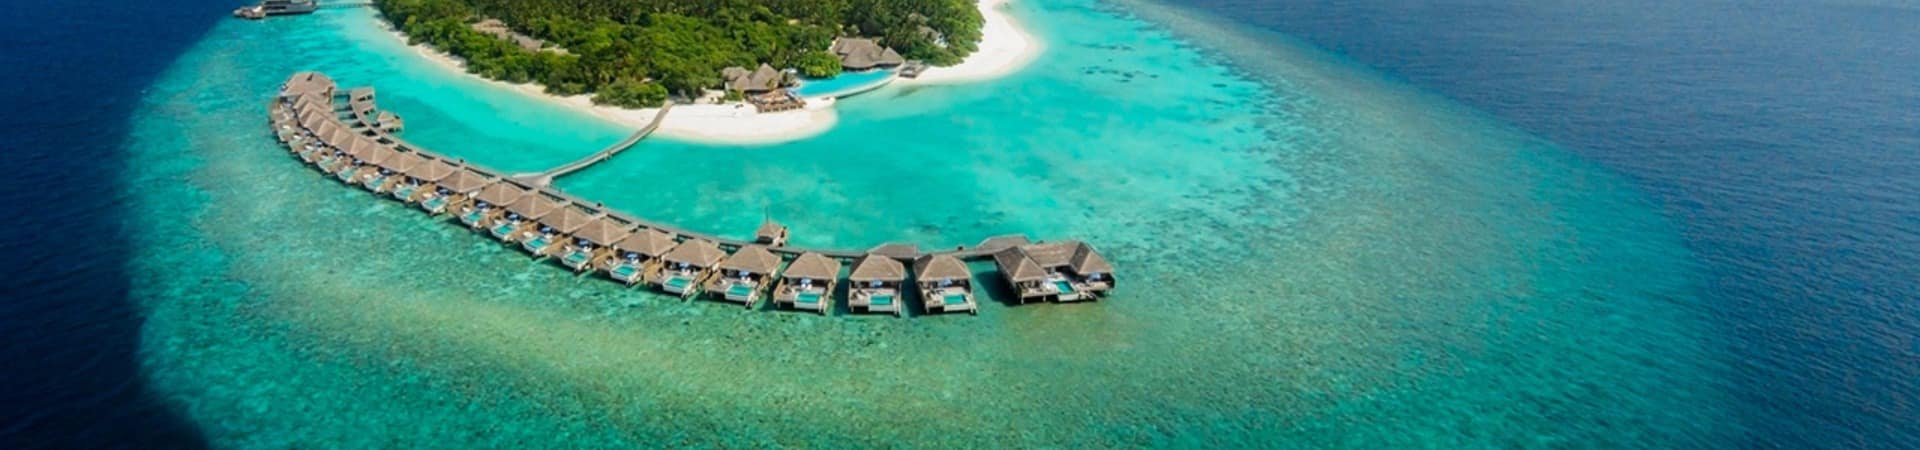 Dusit thani maldives vista aerea